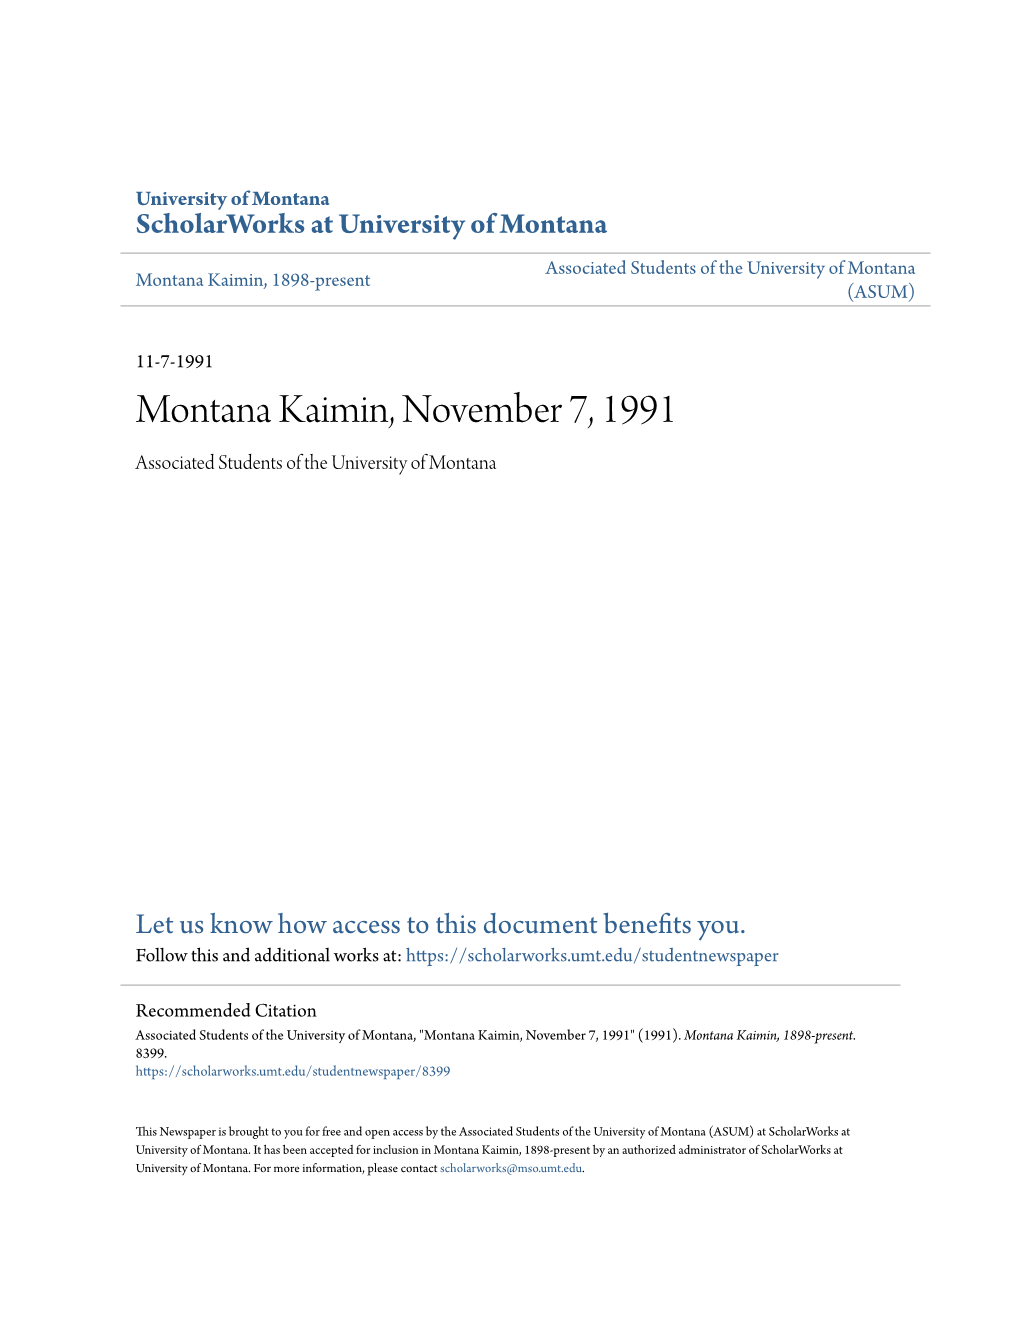 Montana Kaimin, November 7, 1991 Associated Students of the University of Montana